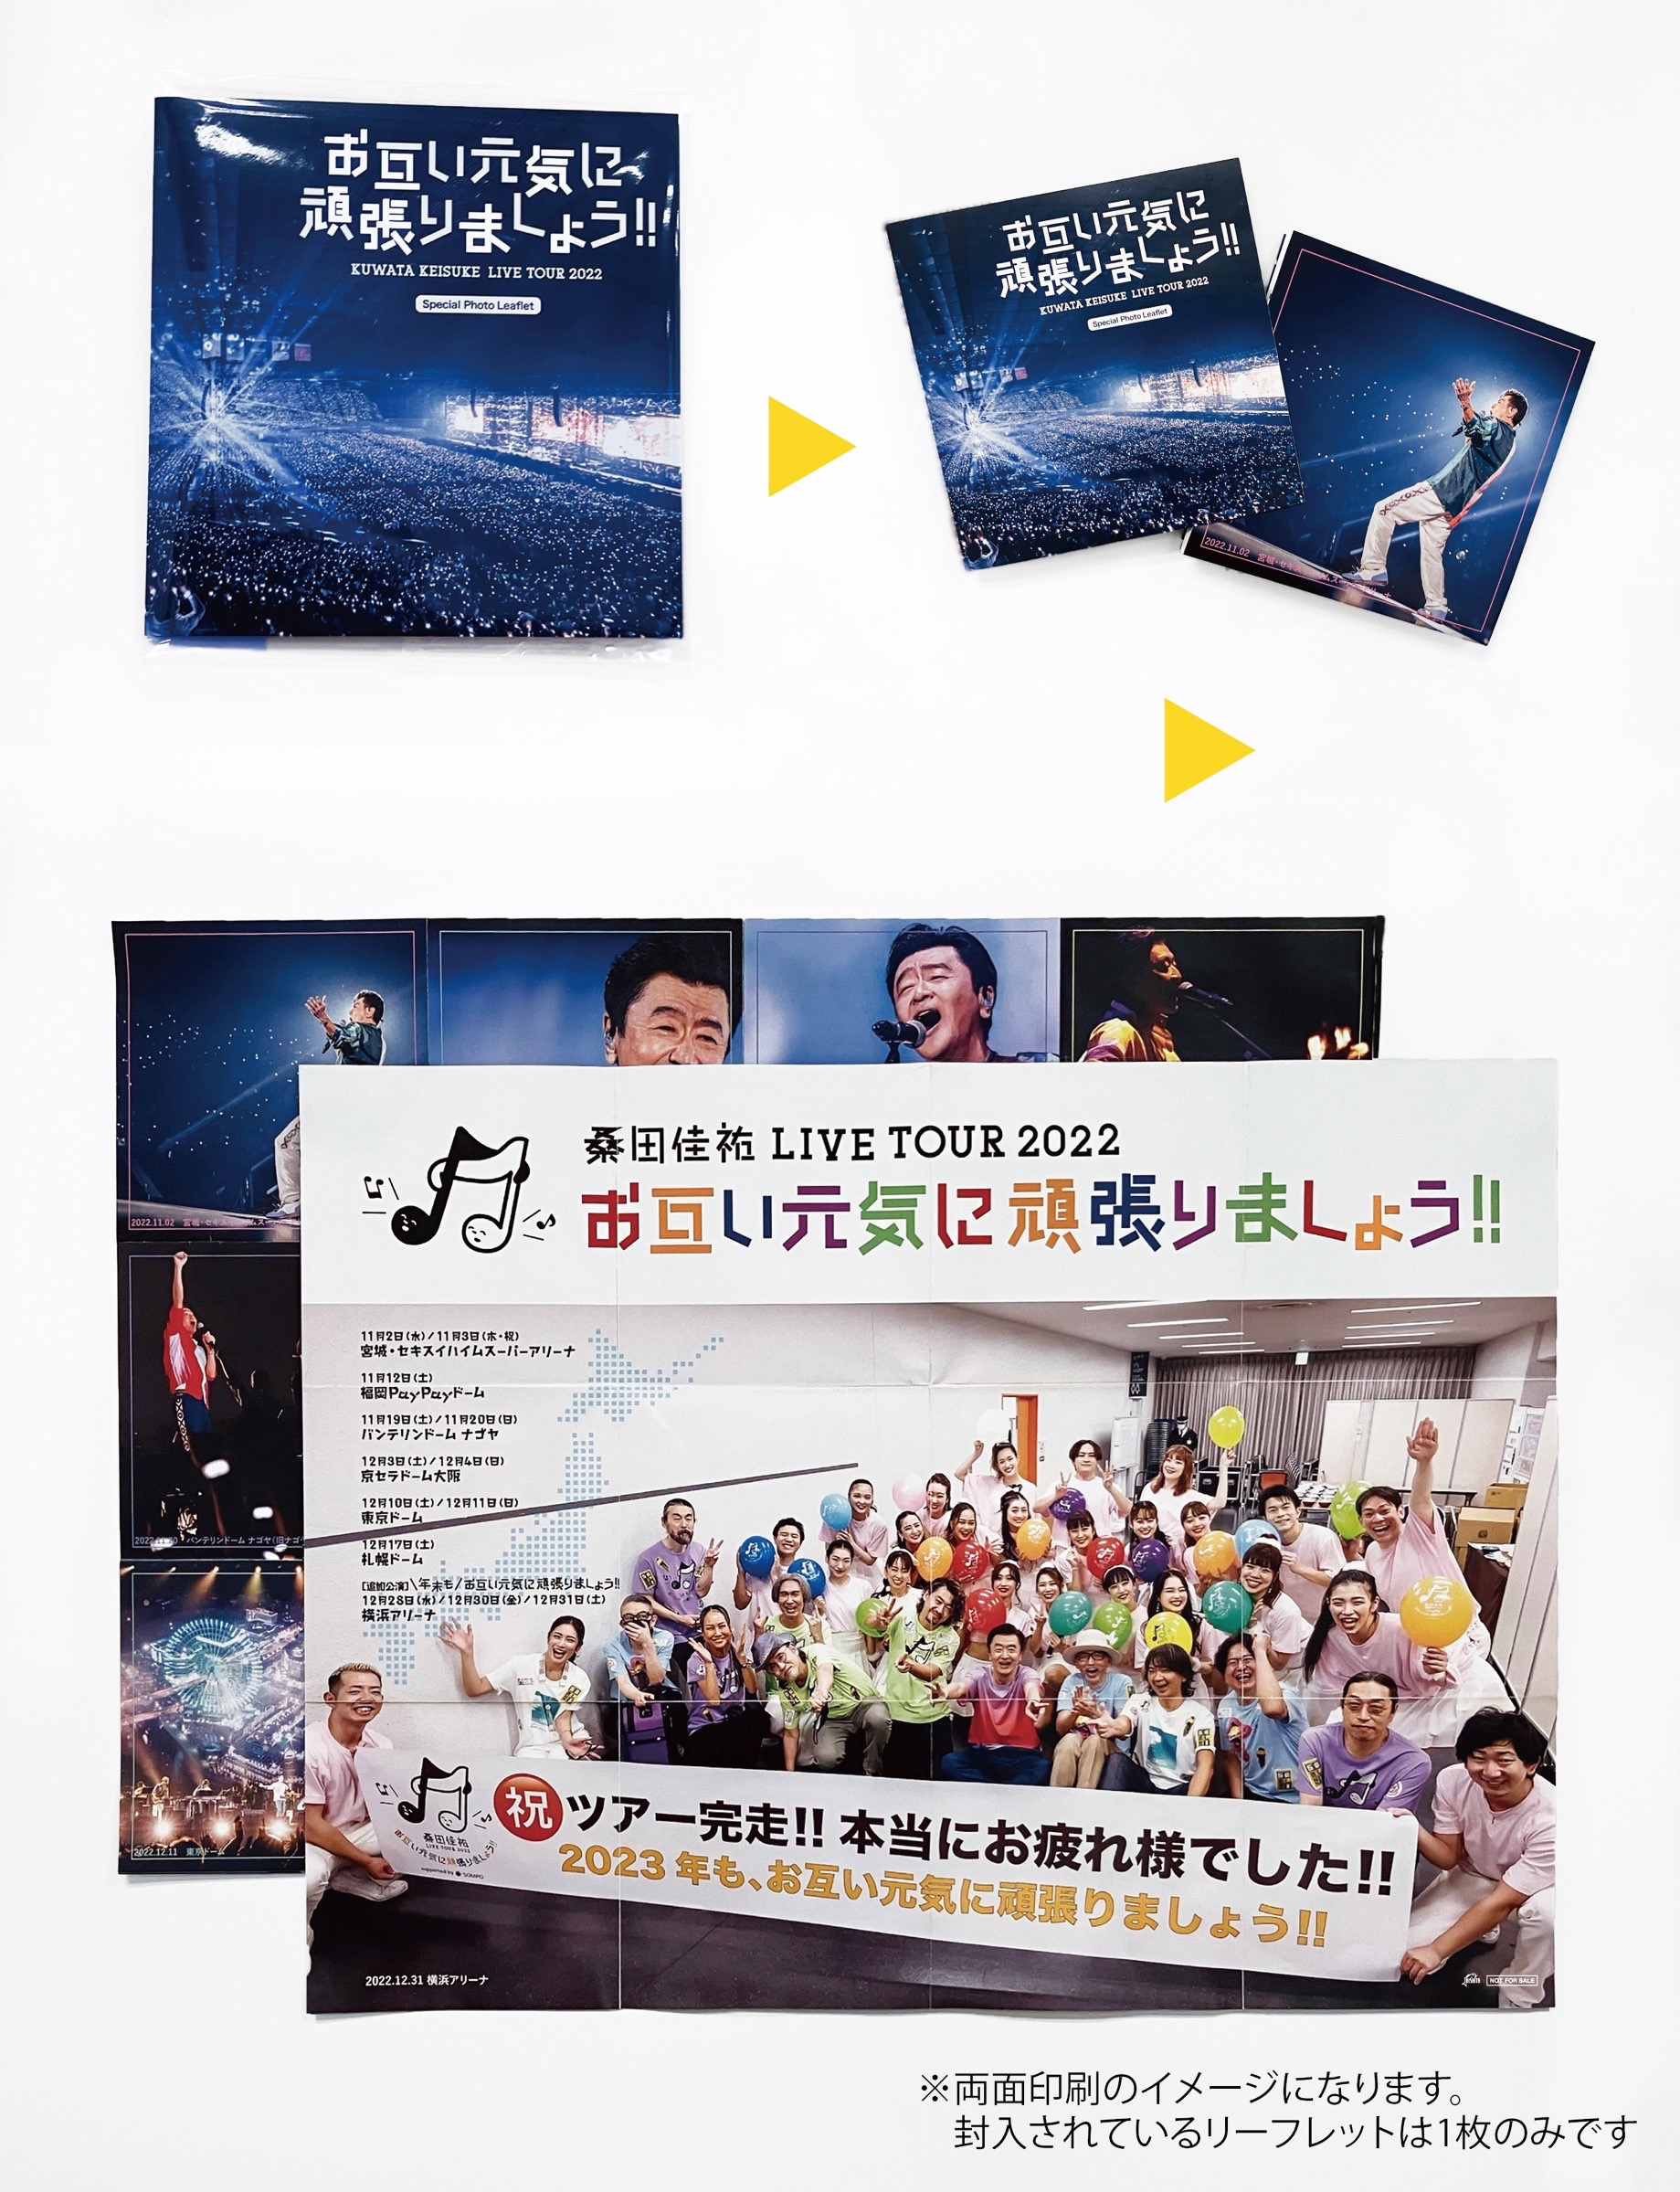 LIVE Blu-ray『お互い元気に頑張りましょう!! -Live at TOKYO DOME